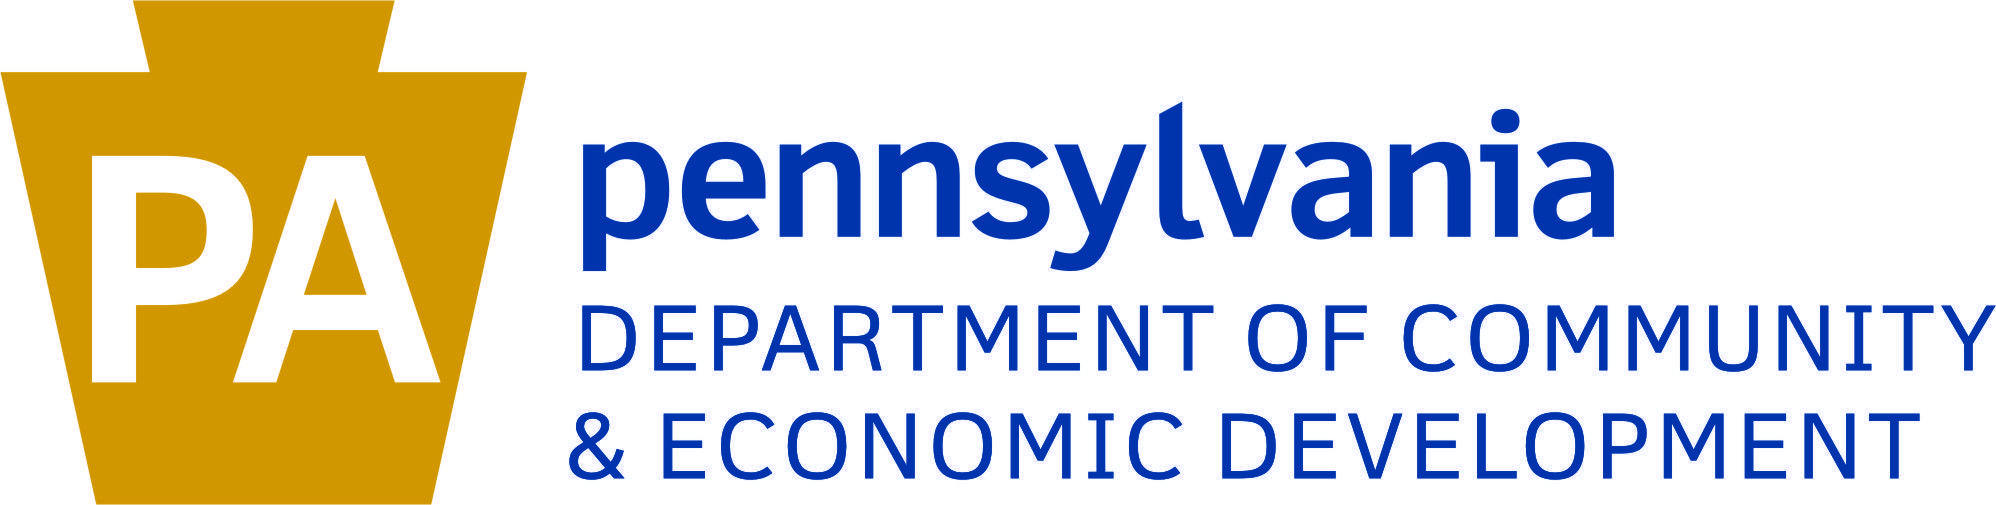 Pennsylvania Logo - Logo Use Guidelines - PA Department of Community & Economic Development